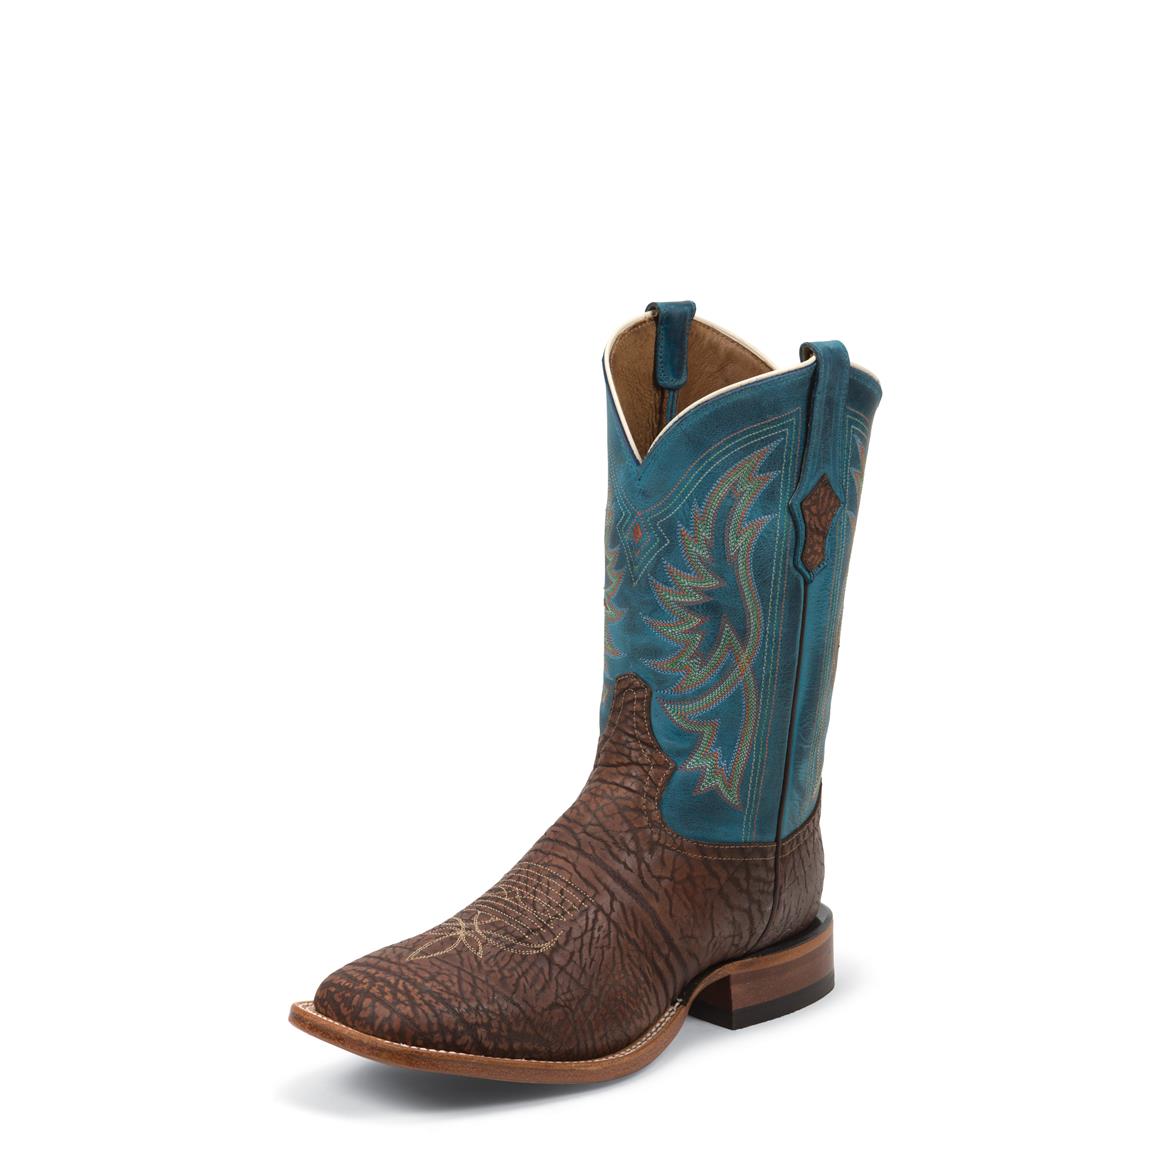 Tony Lama San Saba Cushion Comfort Cowboy Boots, 11